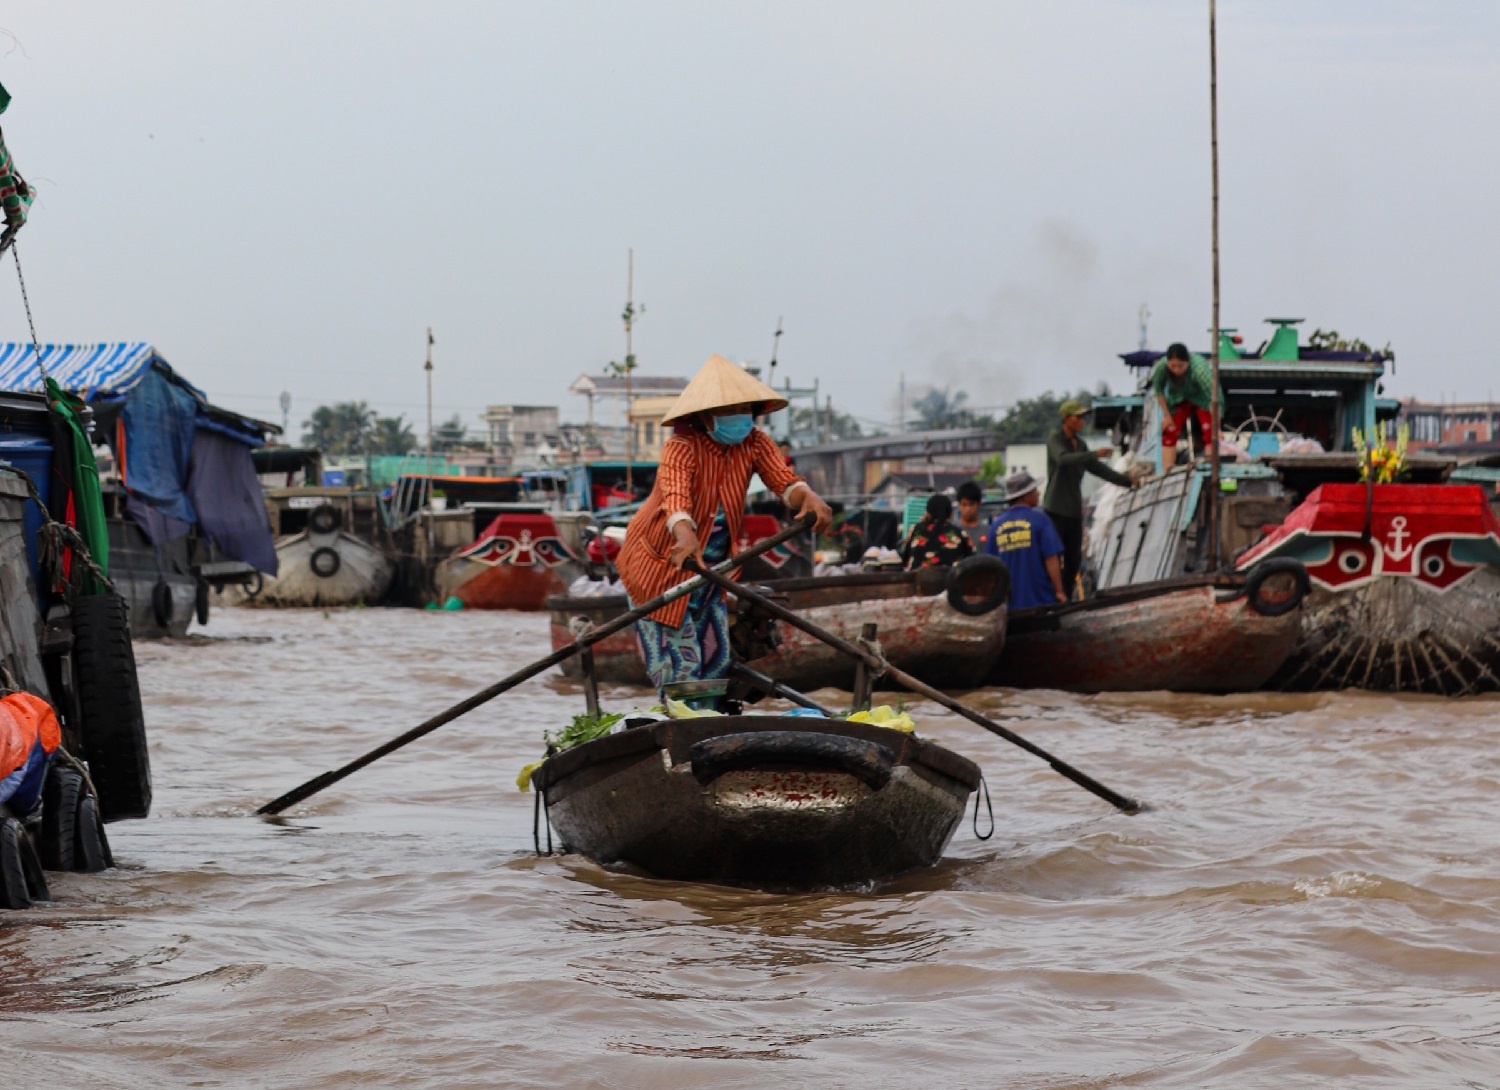 Mekong river tour 2 days 1 night - Vietnam Typical Tours